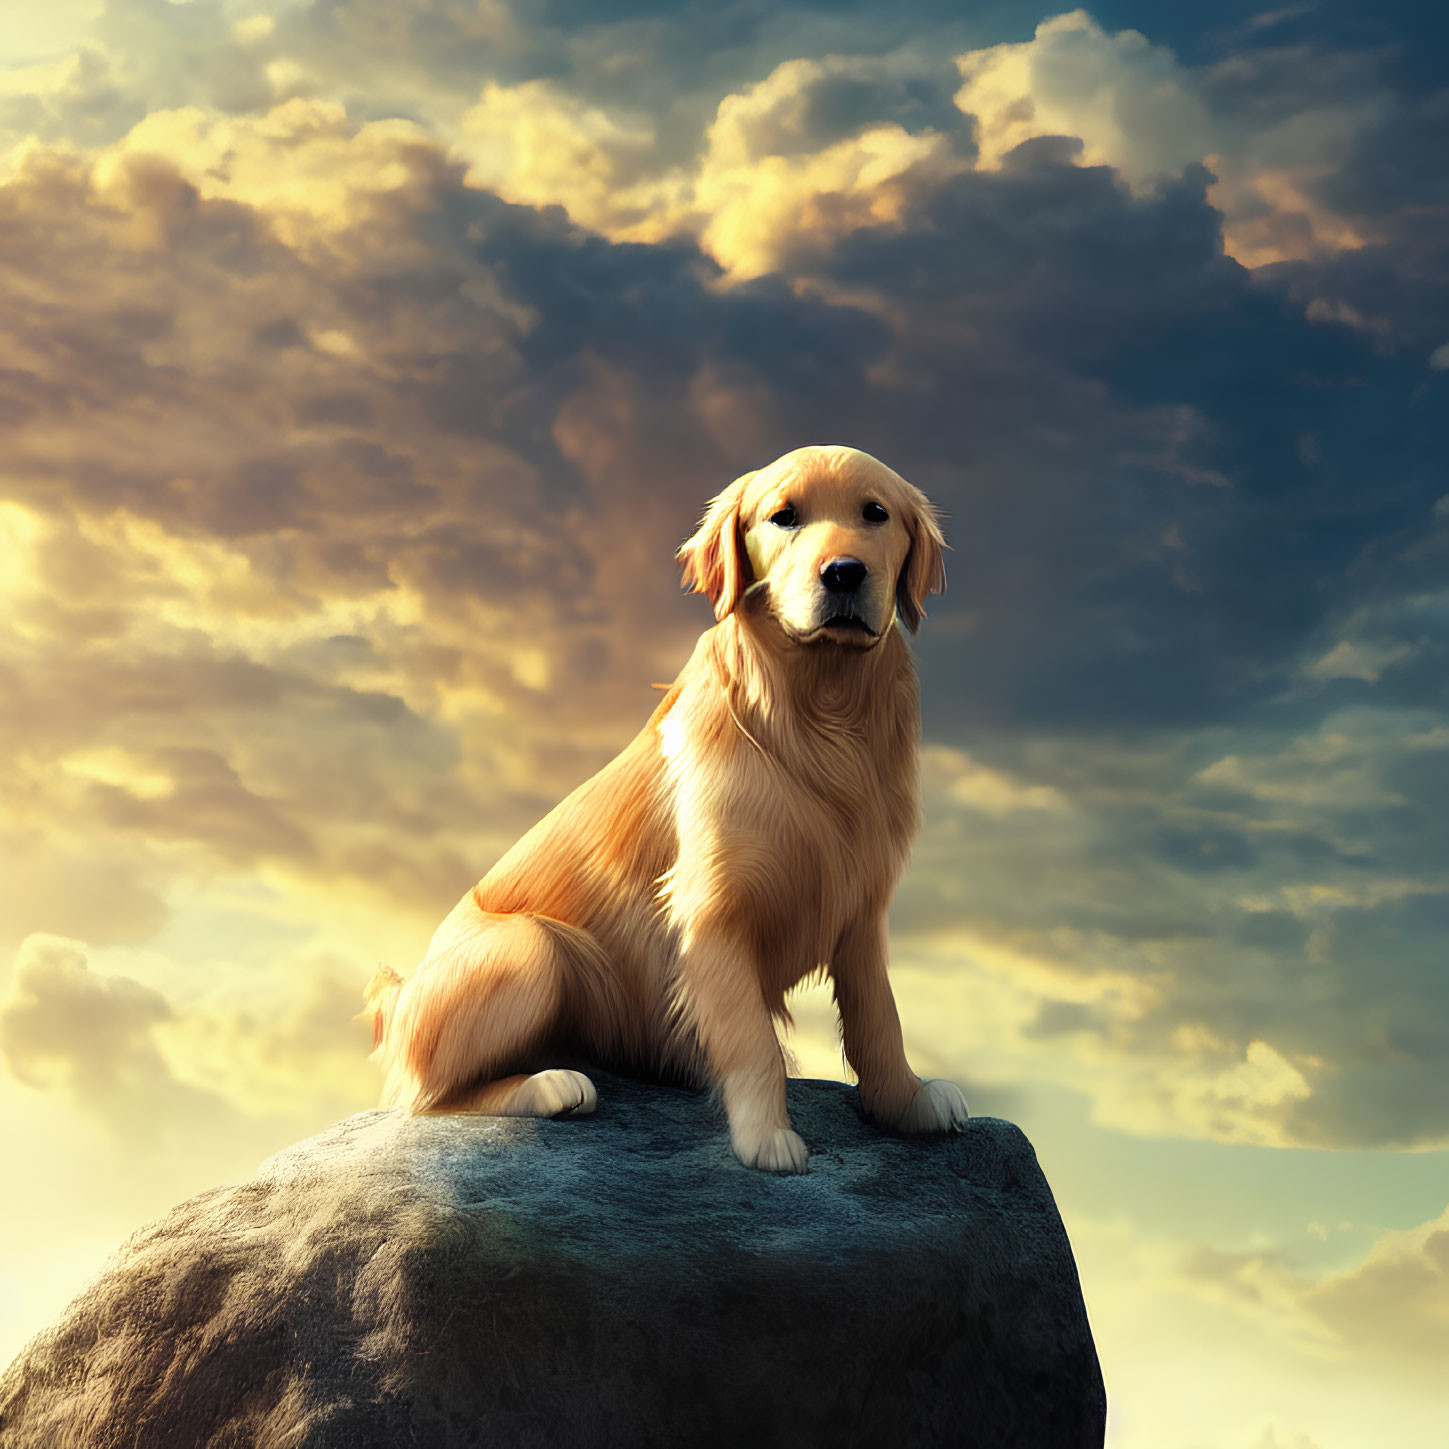 Golden Retriever Sitting on Rock Under Dramatic Sky